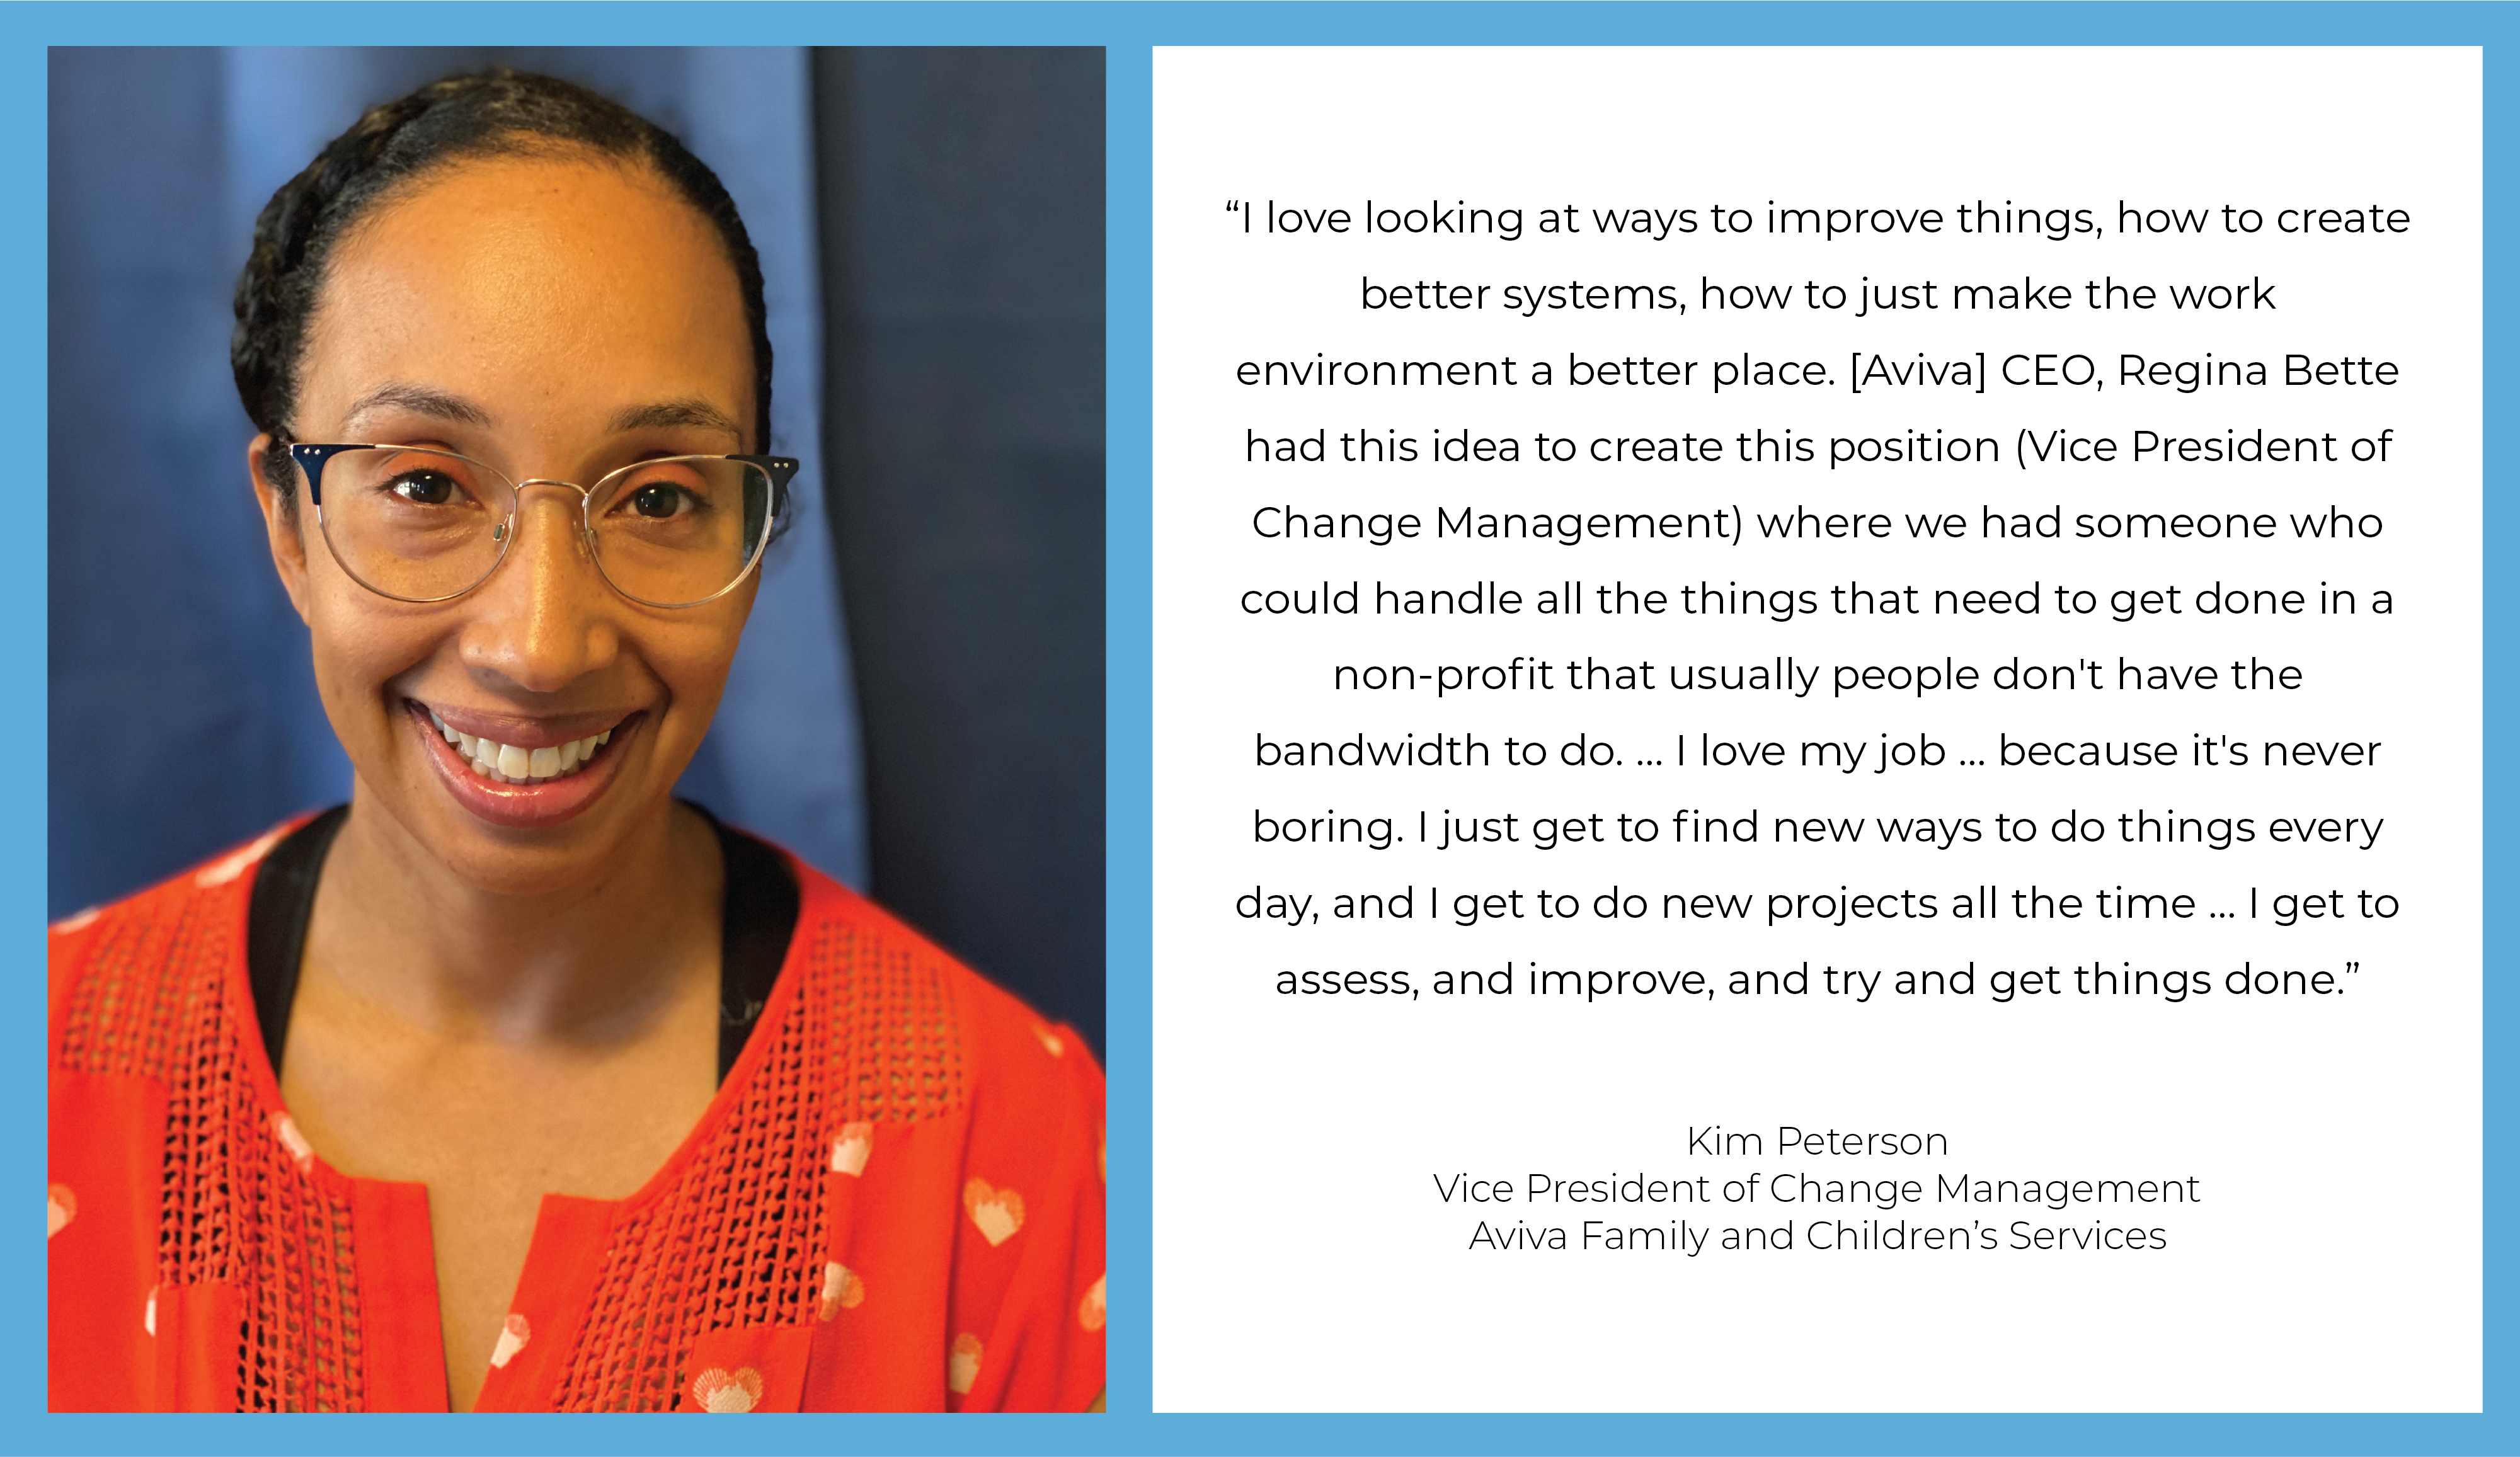 Kim Peterson - Vice President of Change Management, Aviva Family & Children's Services